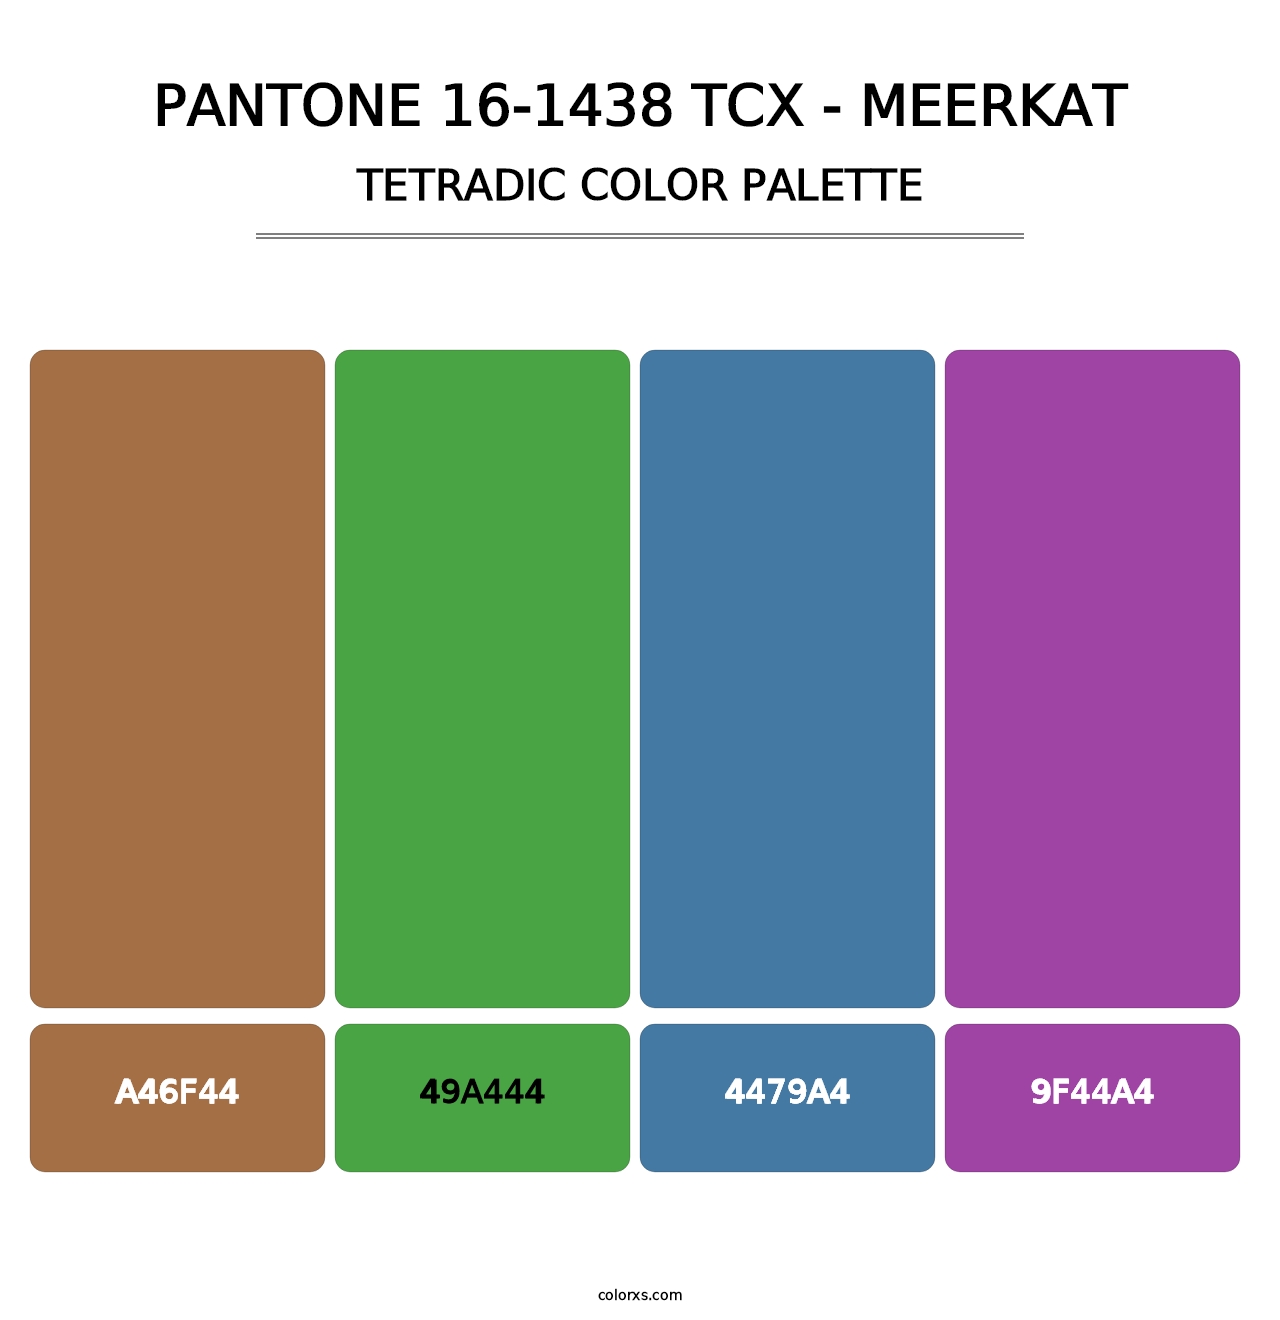 PANTONE 16-1438 TCX - Meerkat - Tetradic Color Palette